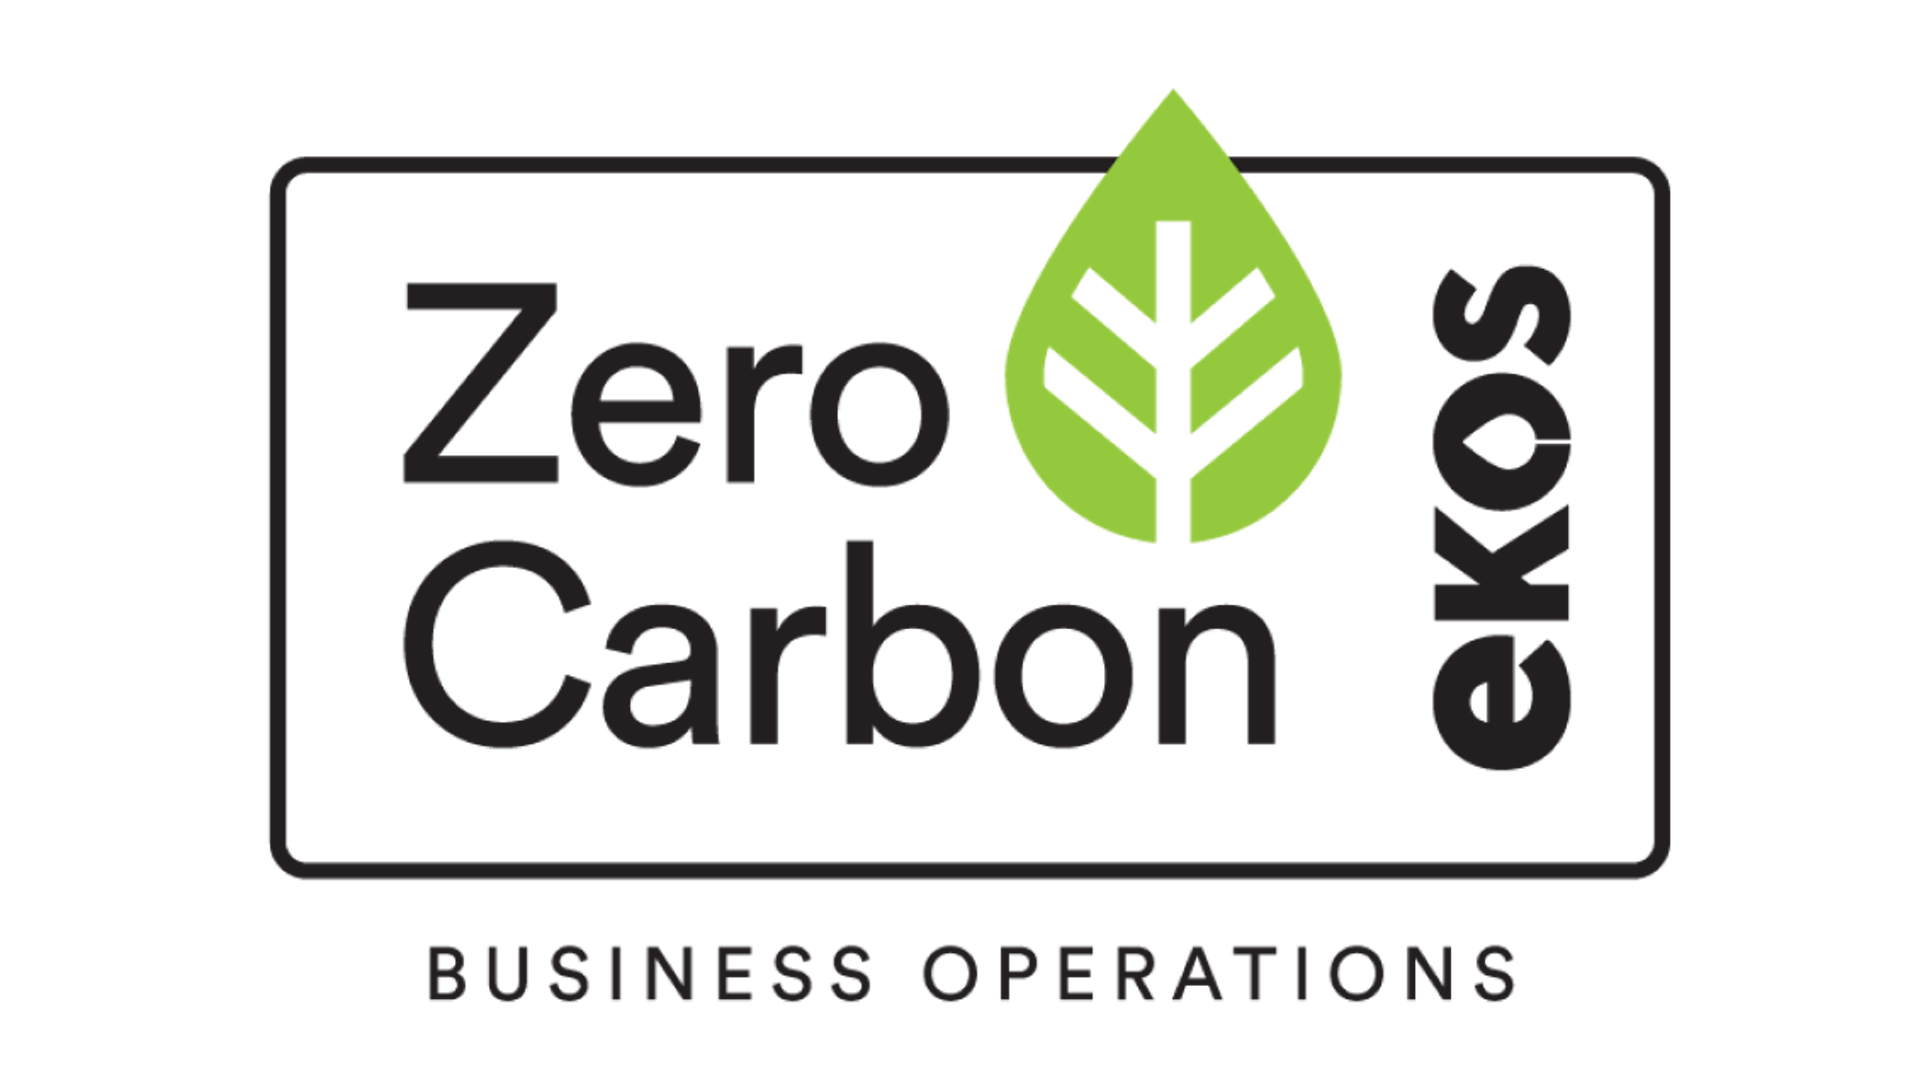 EKOS zero carbon certification for business operations.